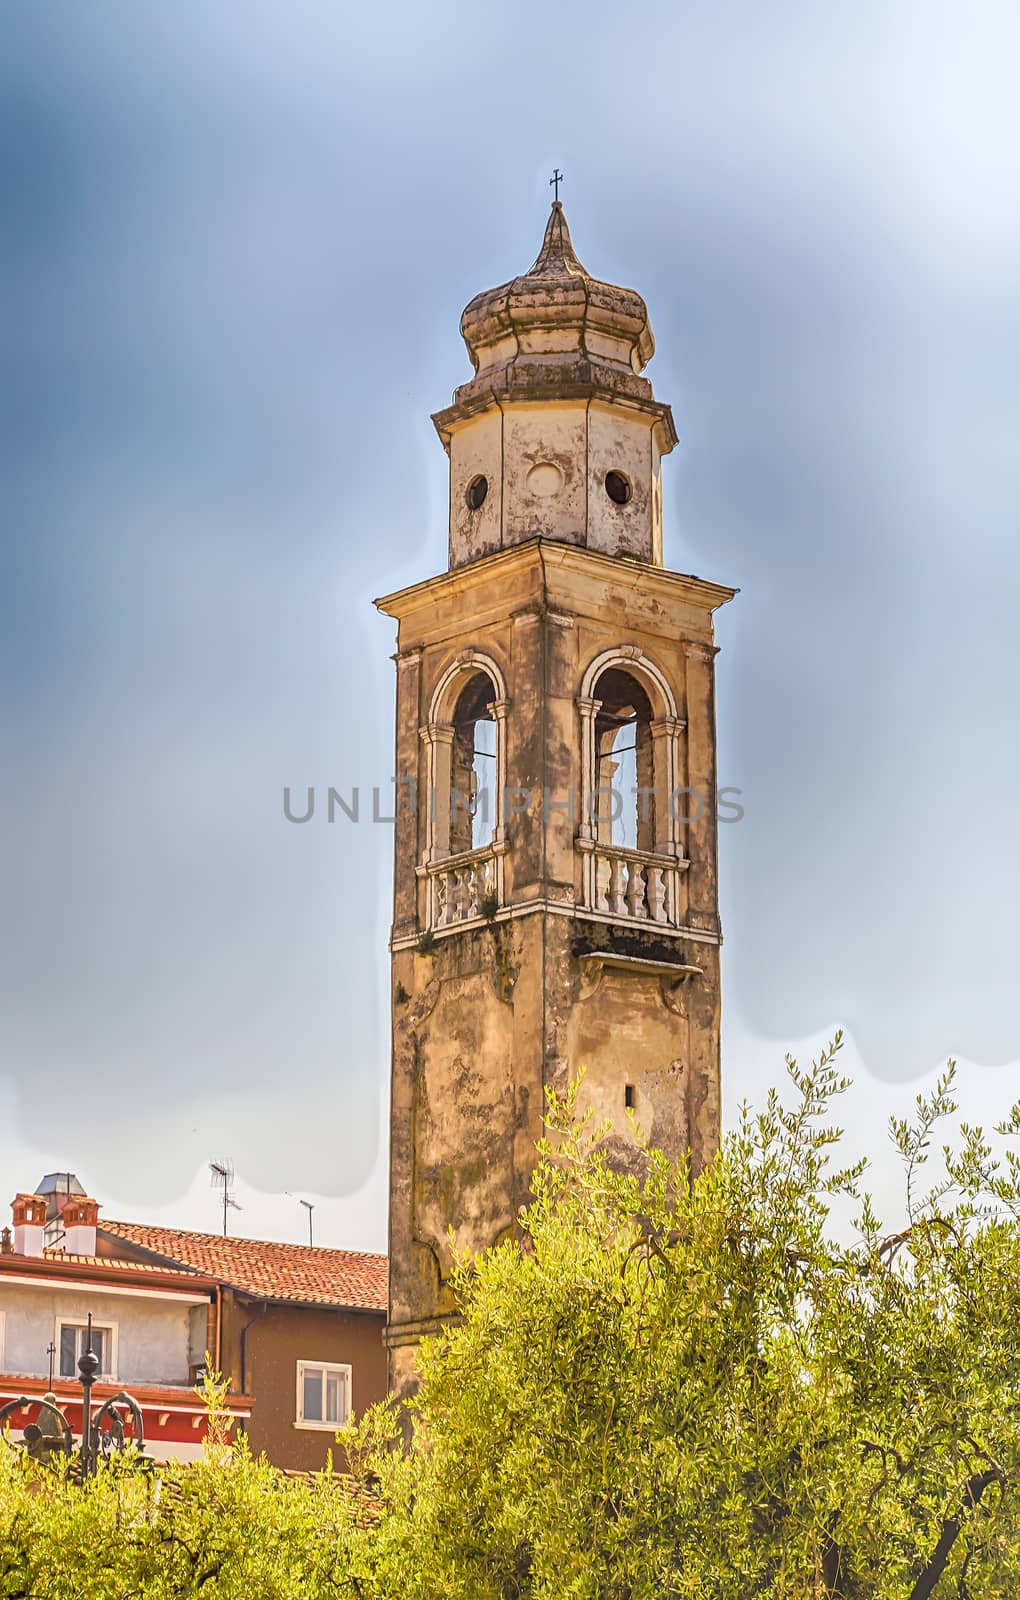 Church of San Nicolo', Lazise, Lake Garda, Italy by marcorubino